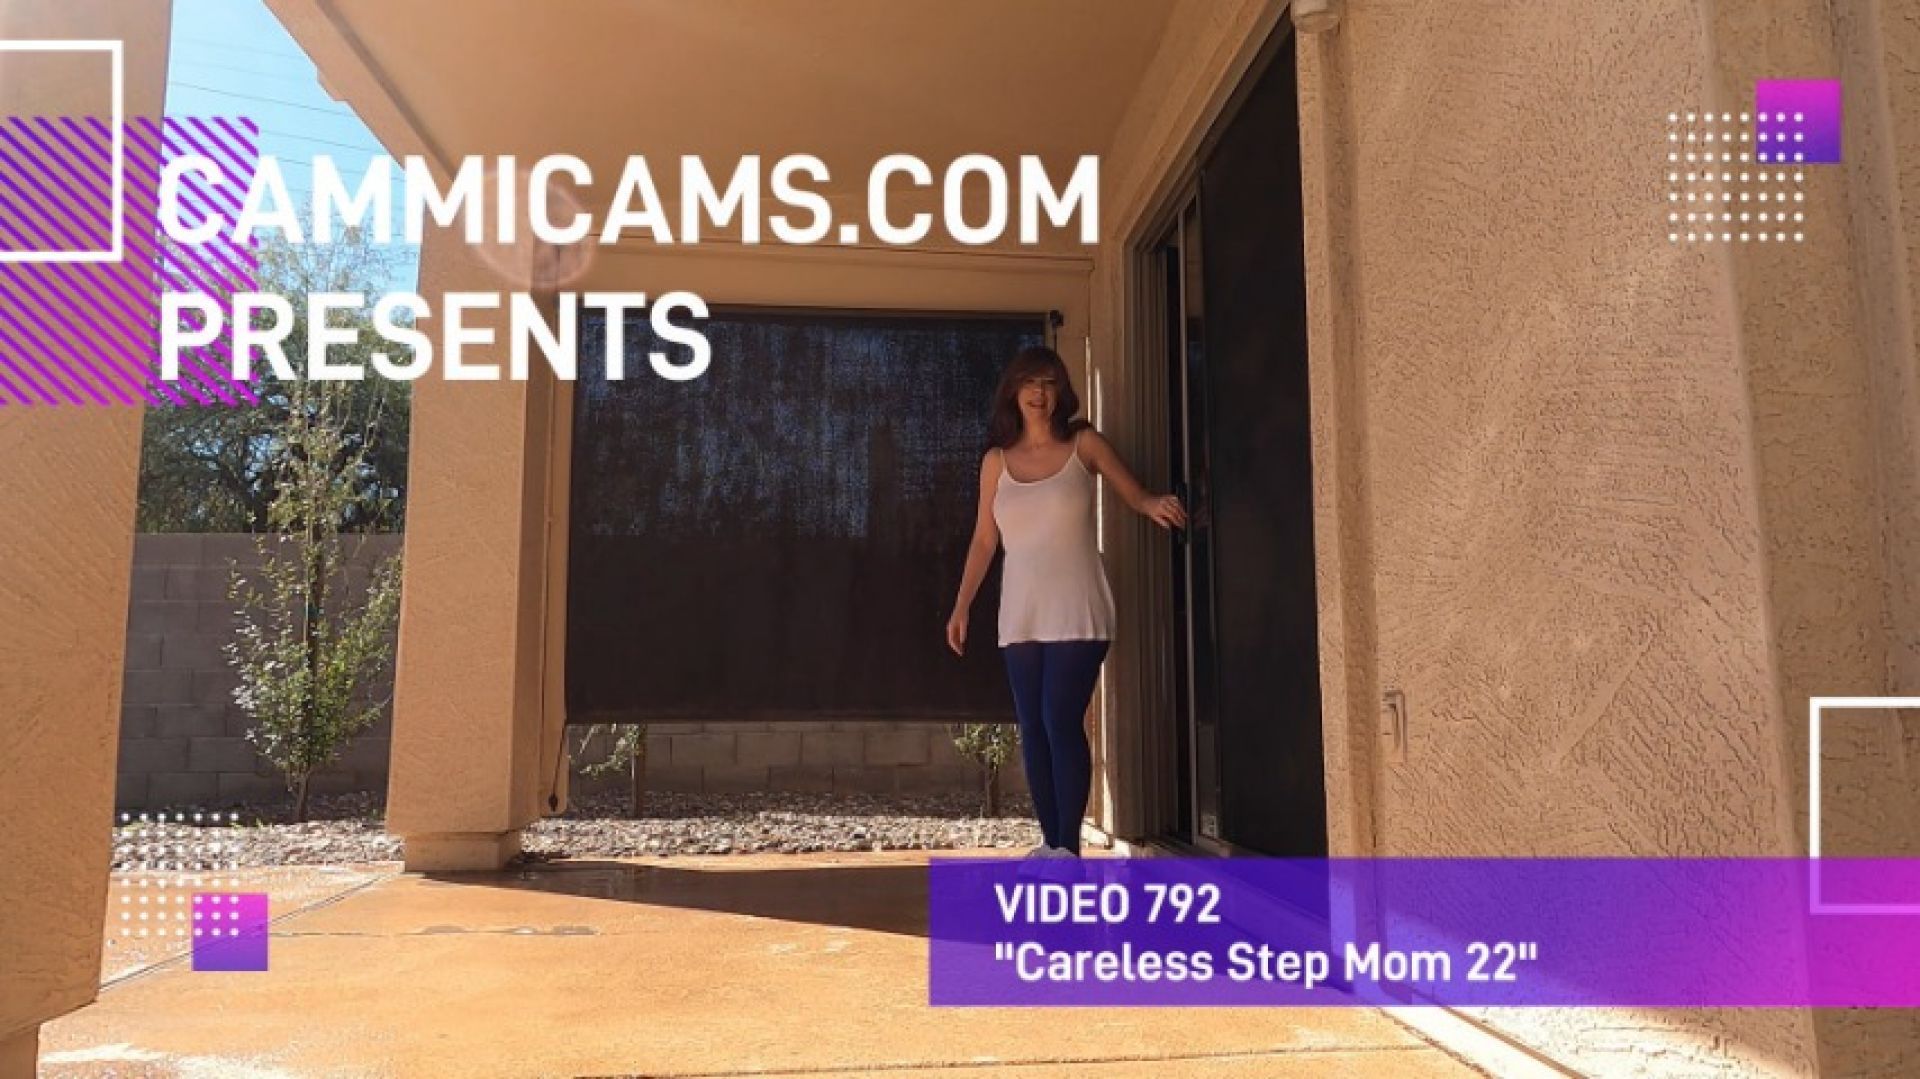 CammiCams Video 792 Careless Step Mom 22